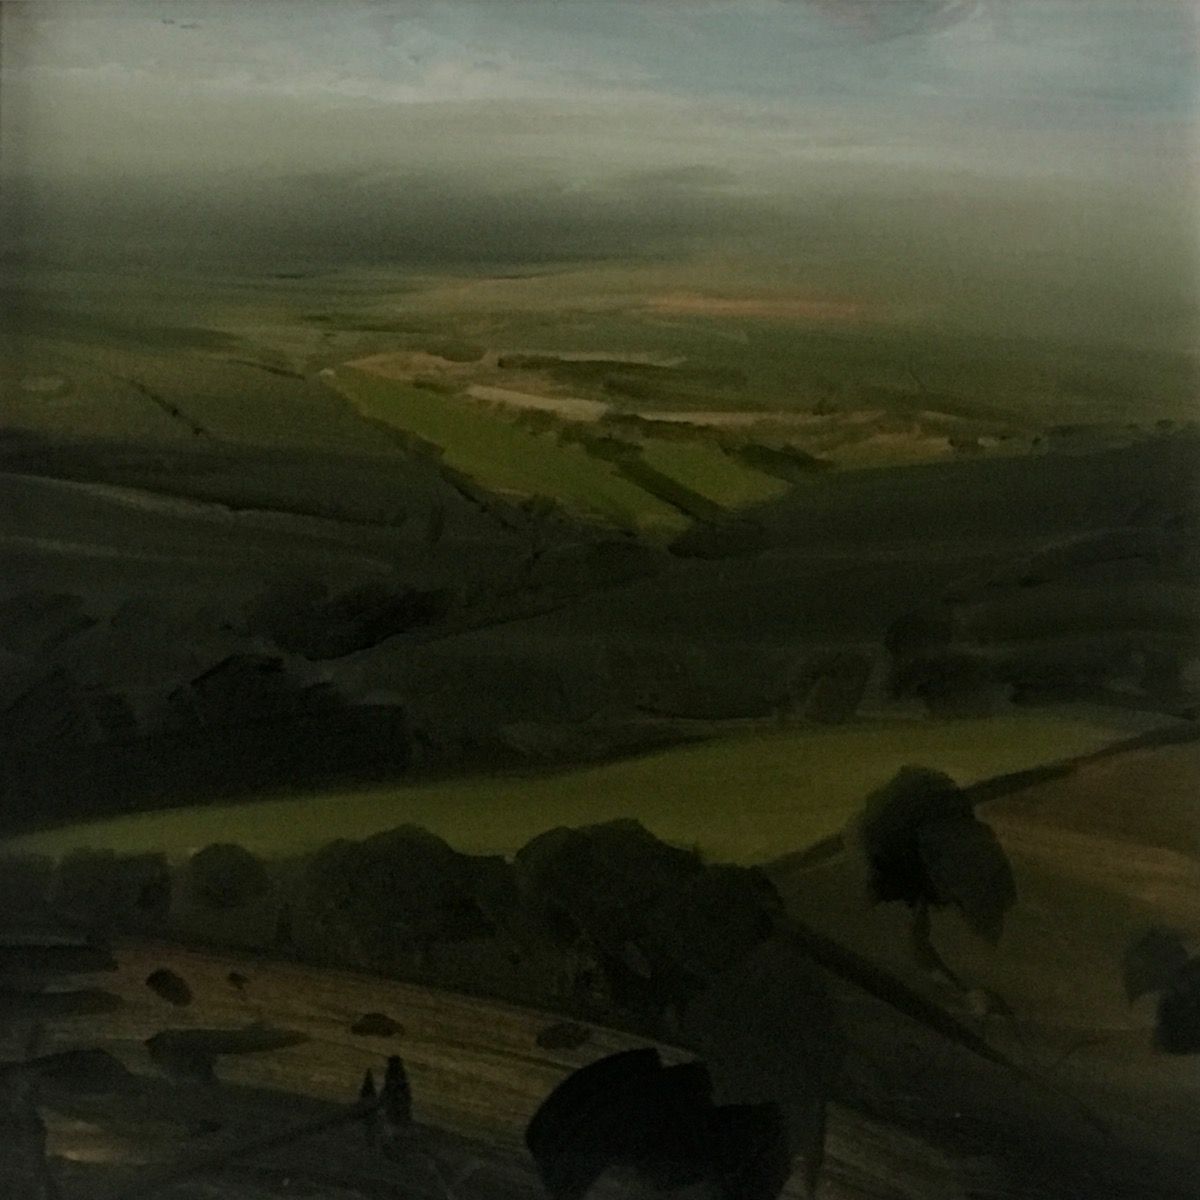 Hills In Mist  by James Naughton